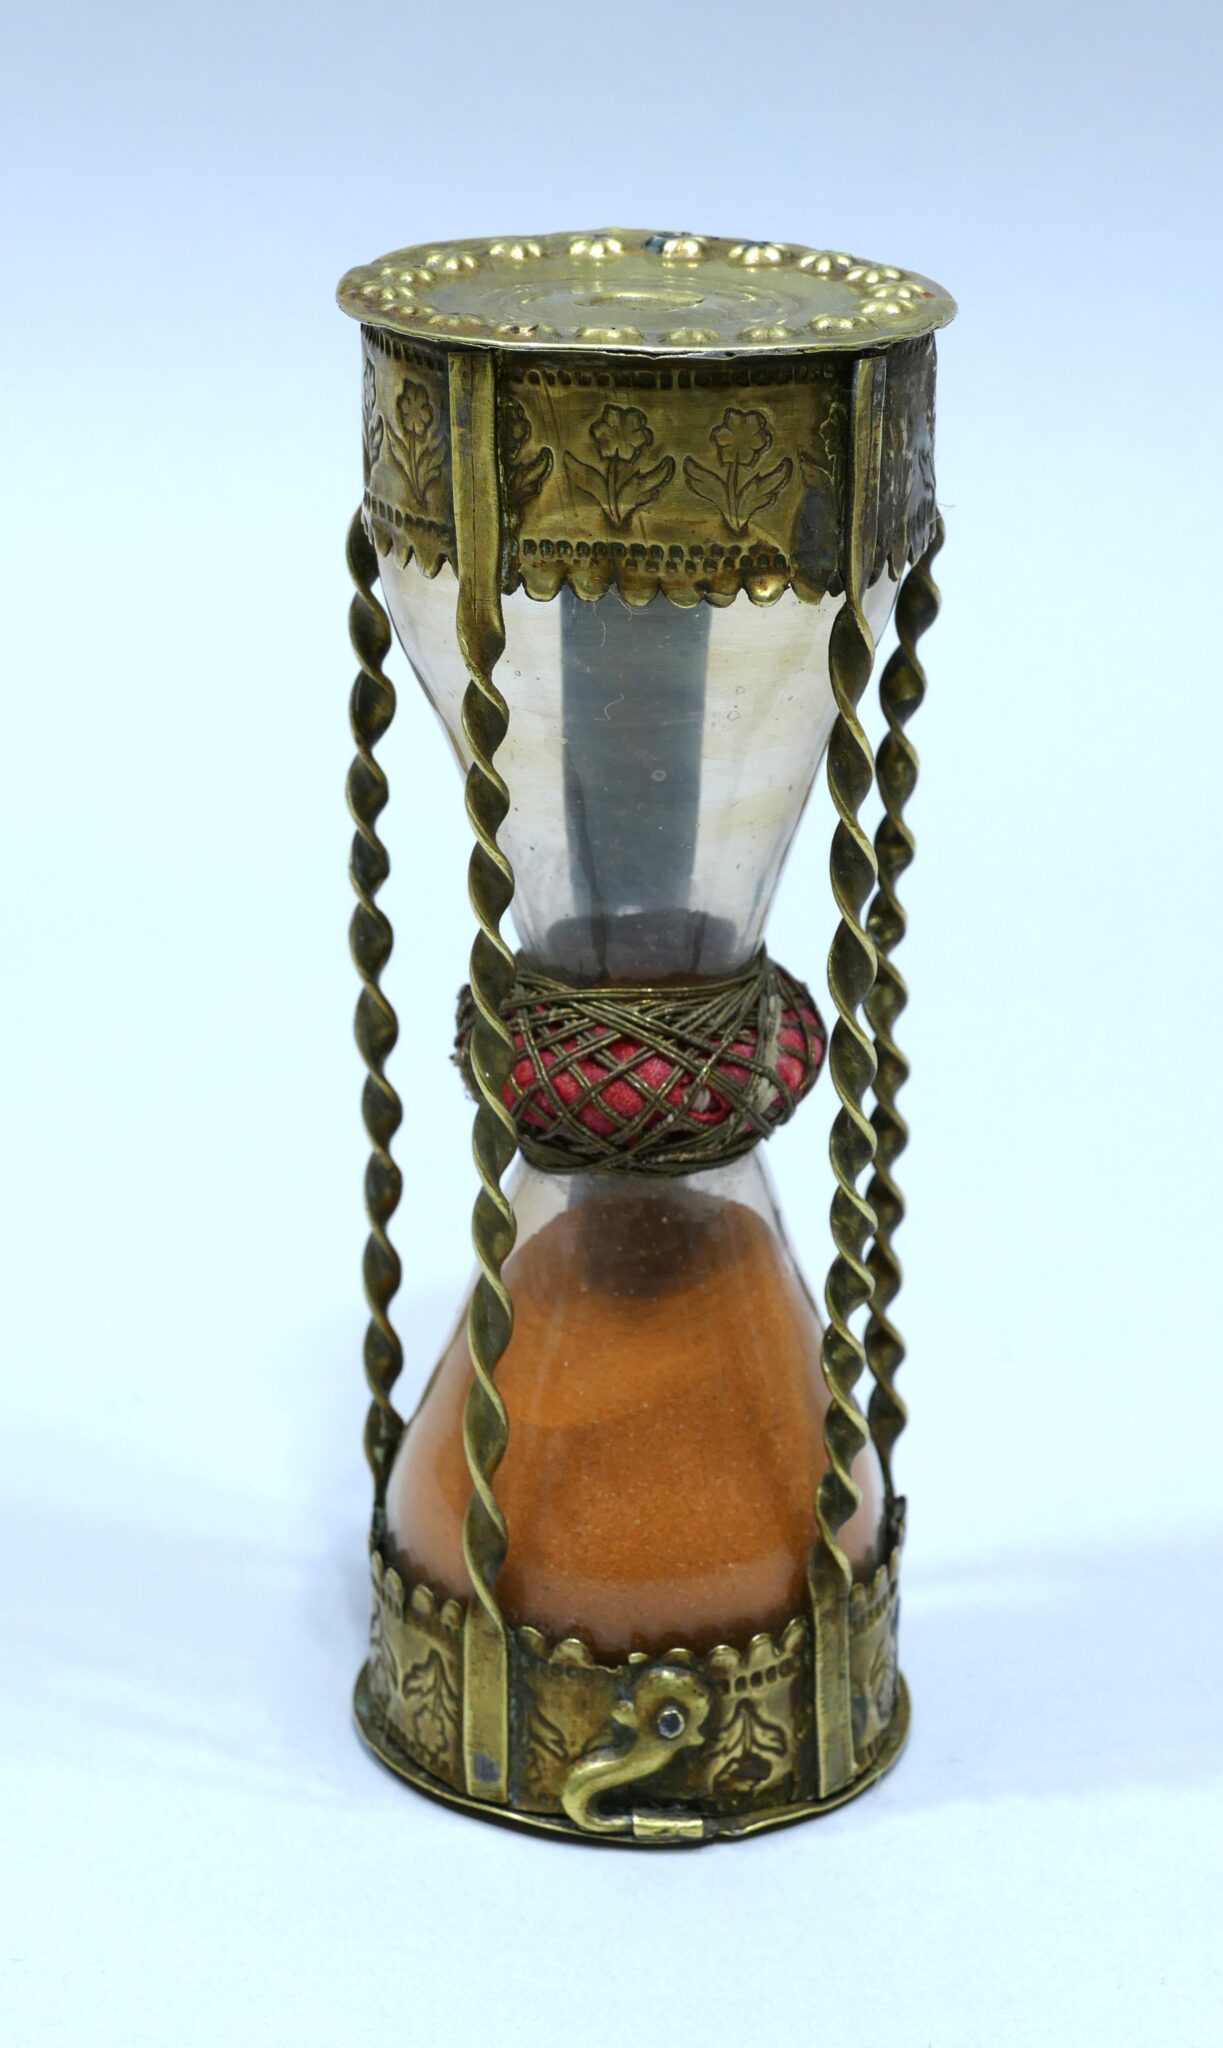 Hourglass in brass made in Nuremberg circa 1680